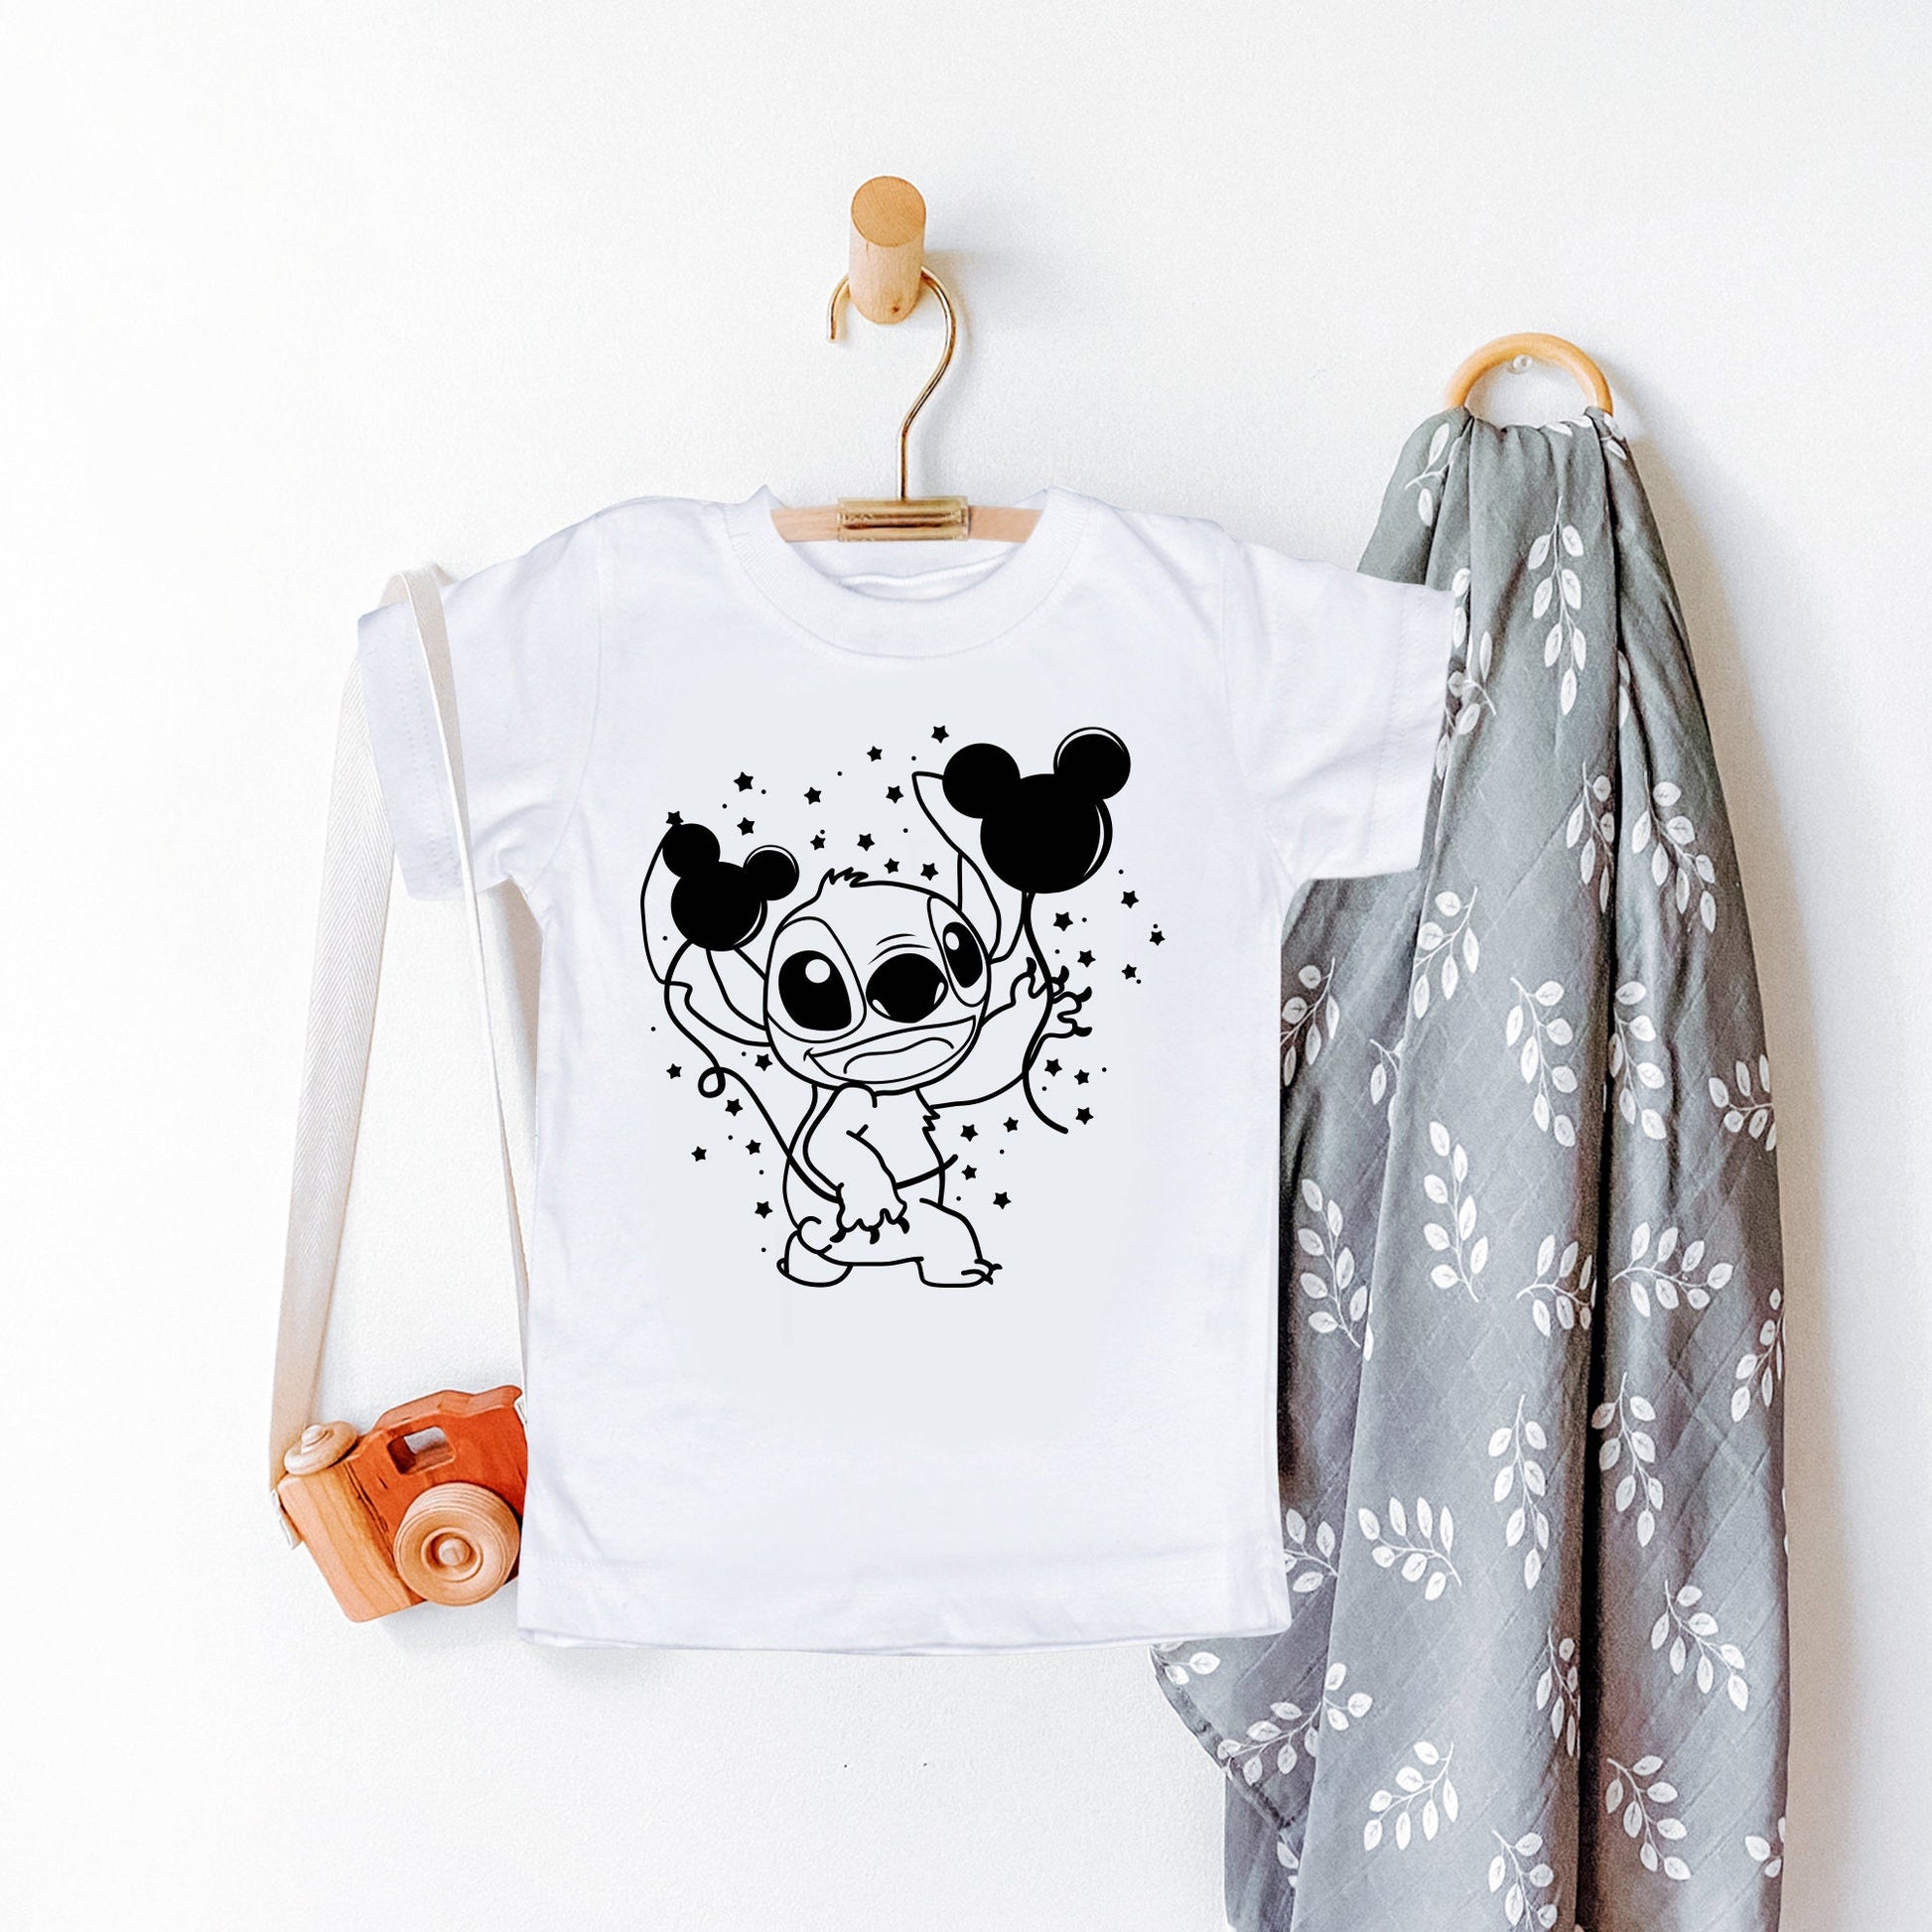 Lilo and Stitch Shirt, Kids Disney Shirt, Disney Vacation Shirt, Disney World Shirt, Custom Kids Shirts